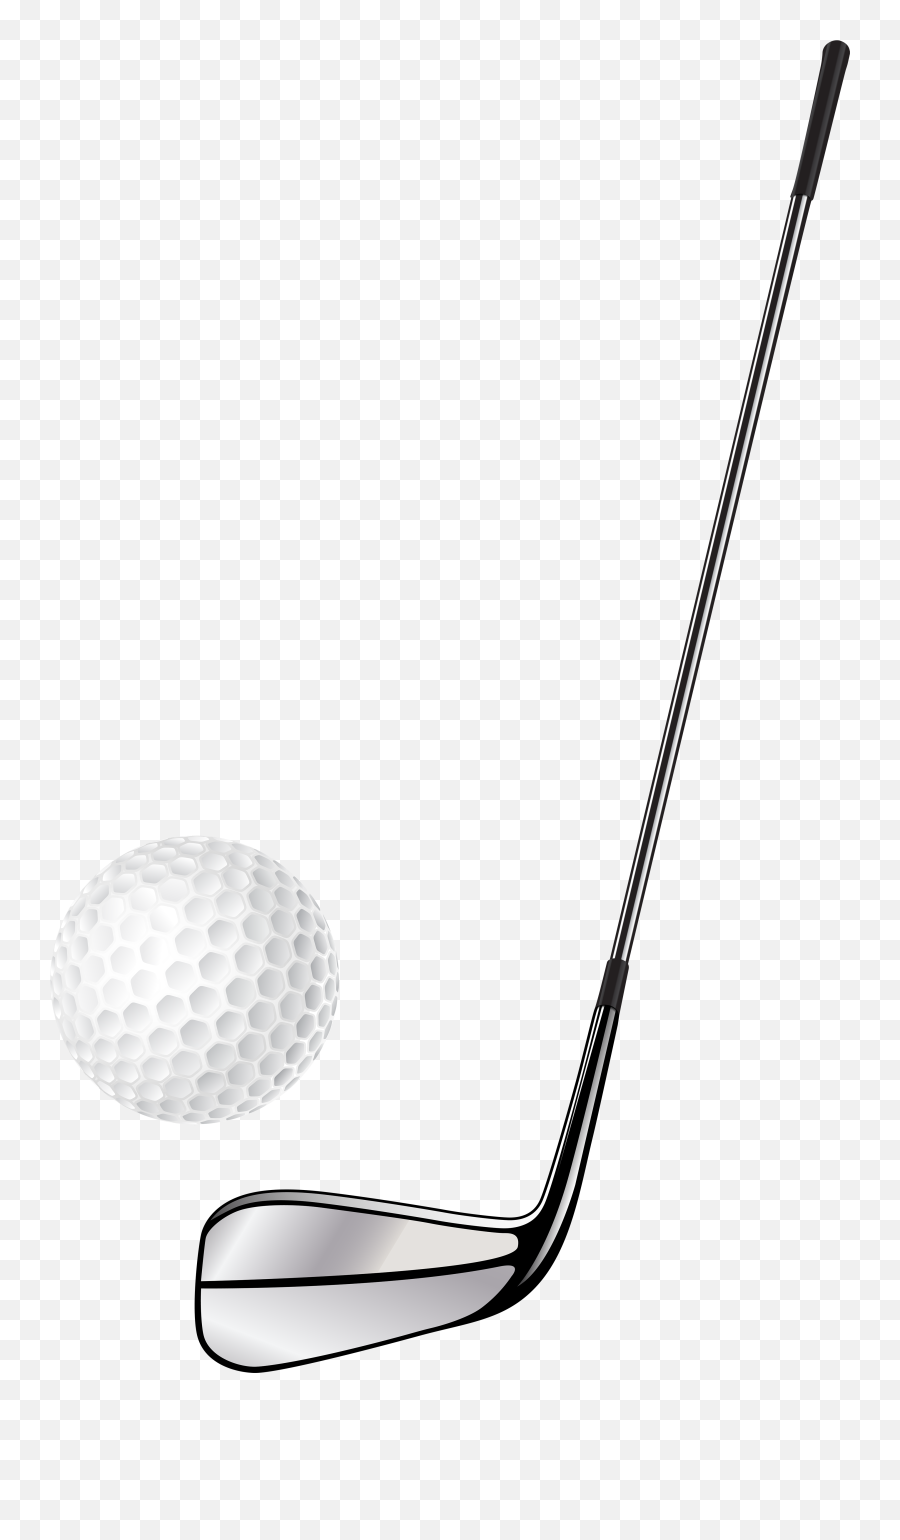 Golf Club Stick And Ball Png Clip Art - Golf Stick And Ball Emoji,Golf Ball Clipart